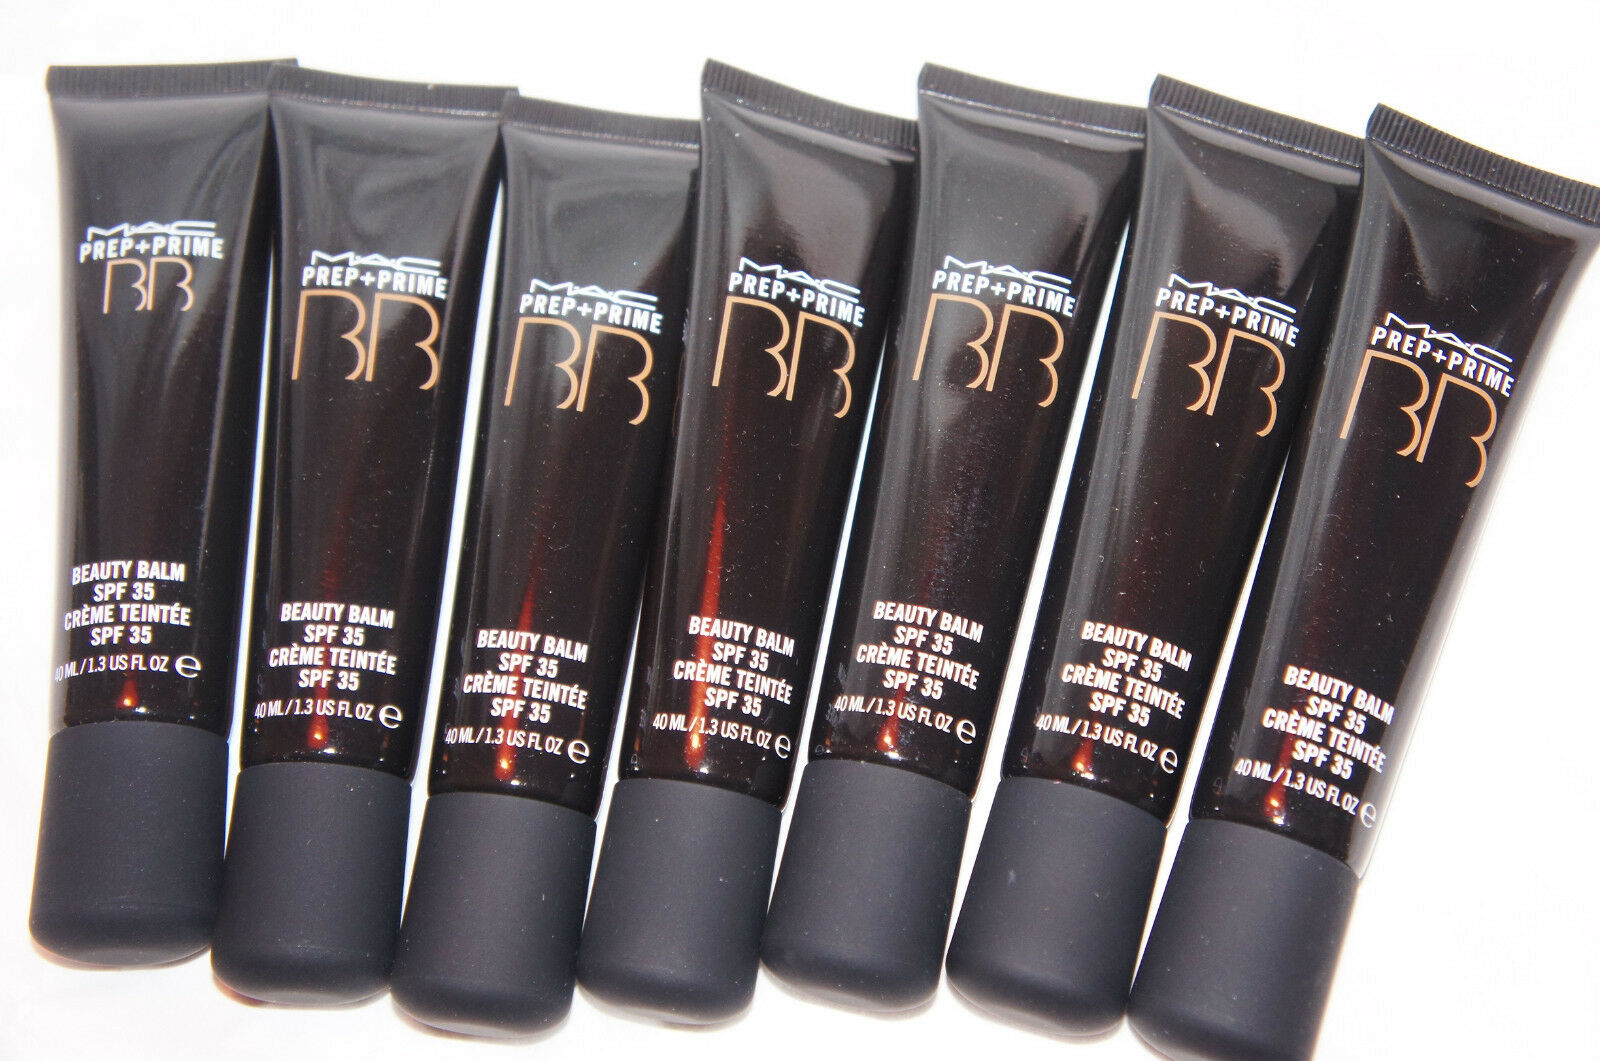 Mac Prep + Prime Bb Beauty Balm Spf 35 Tinted Foundation Cream You Choose